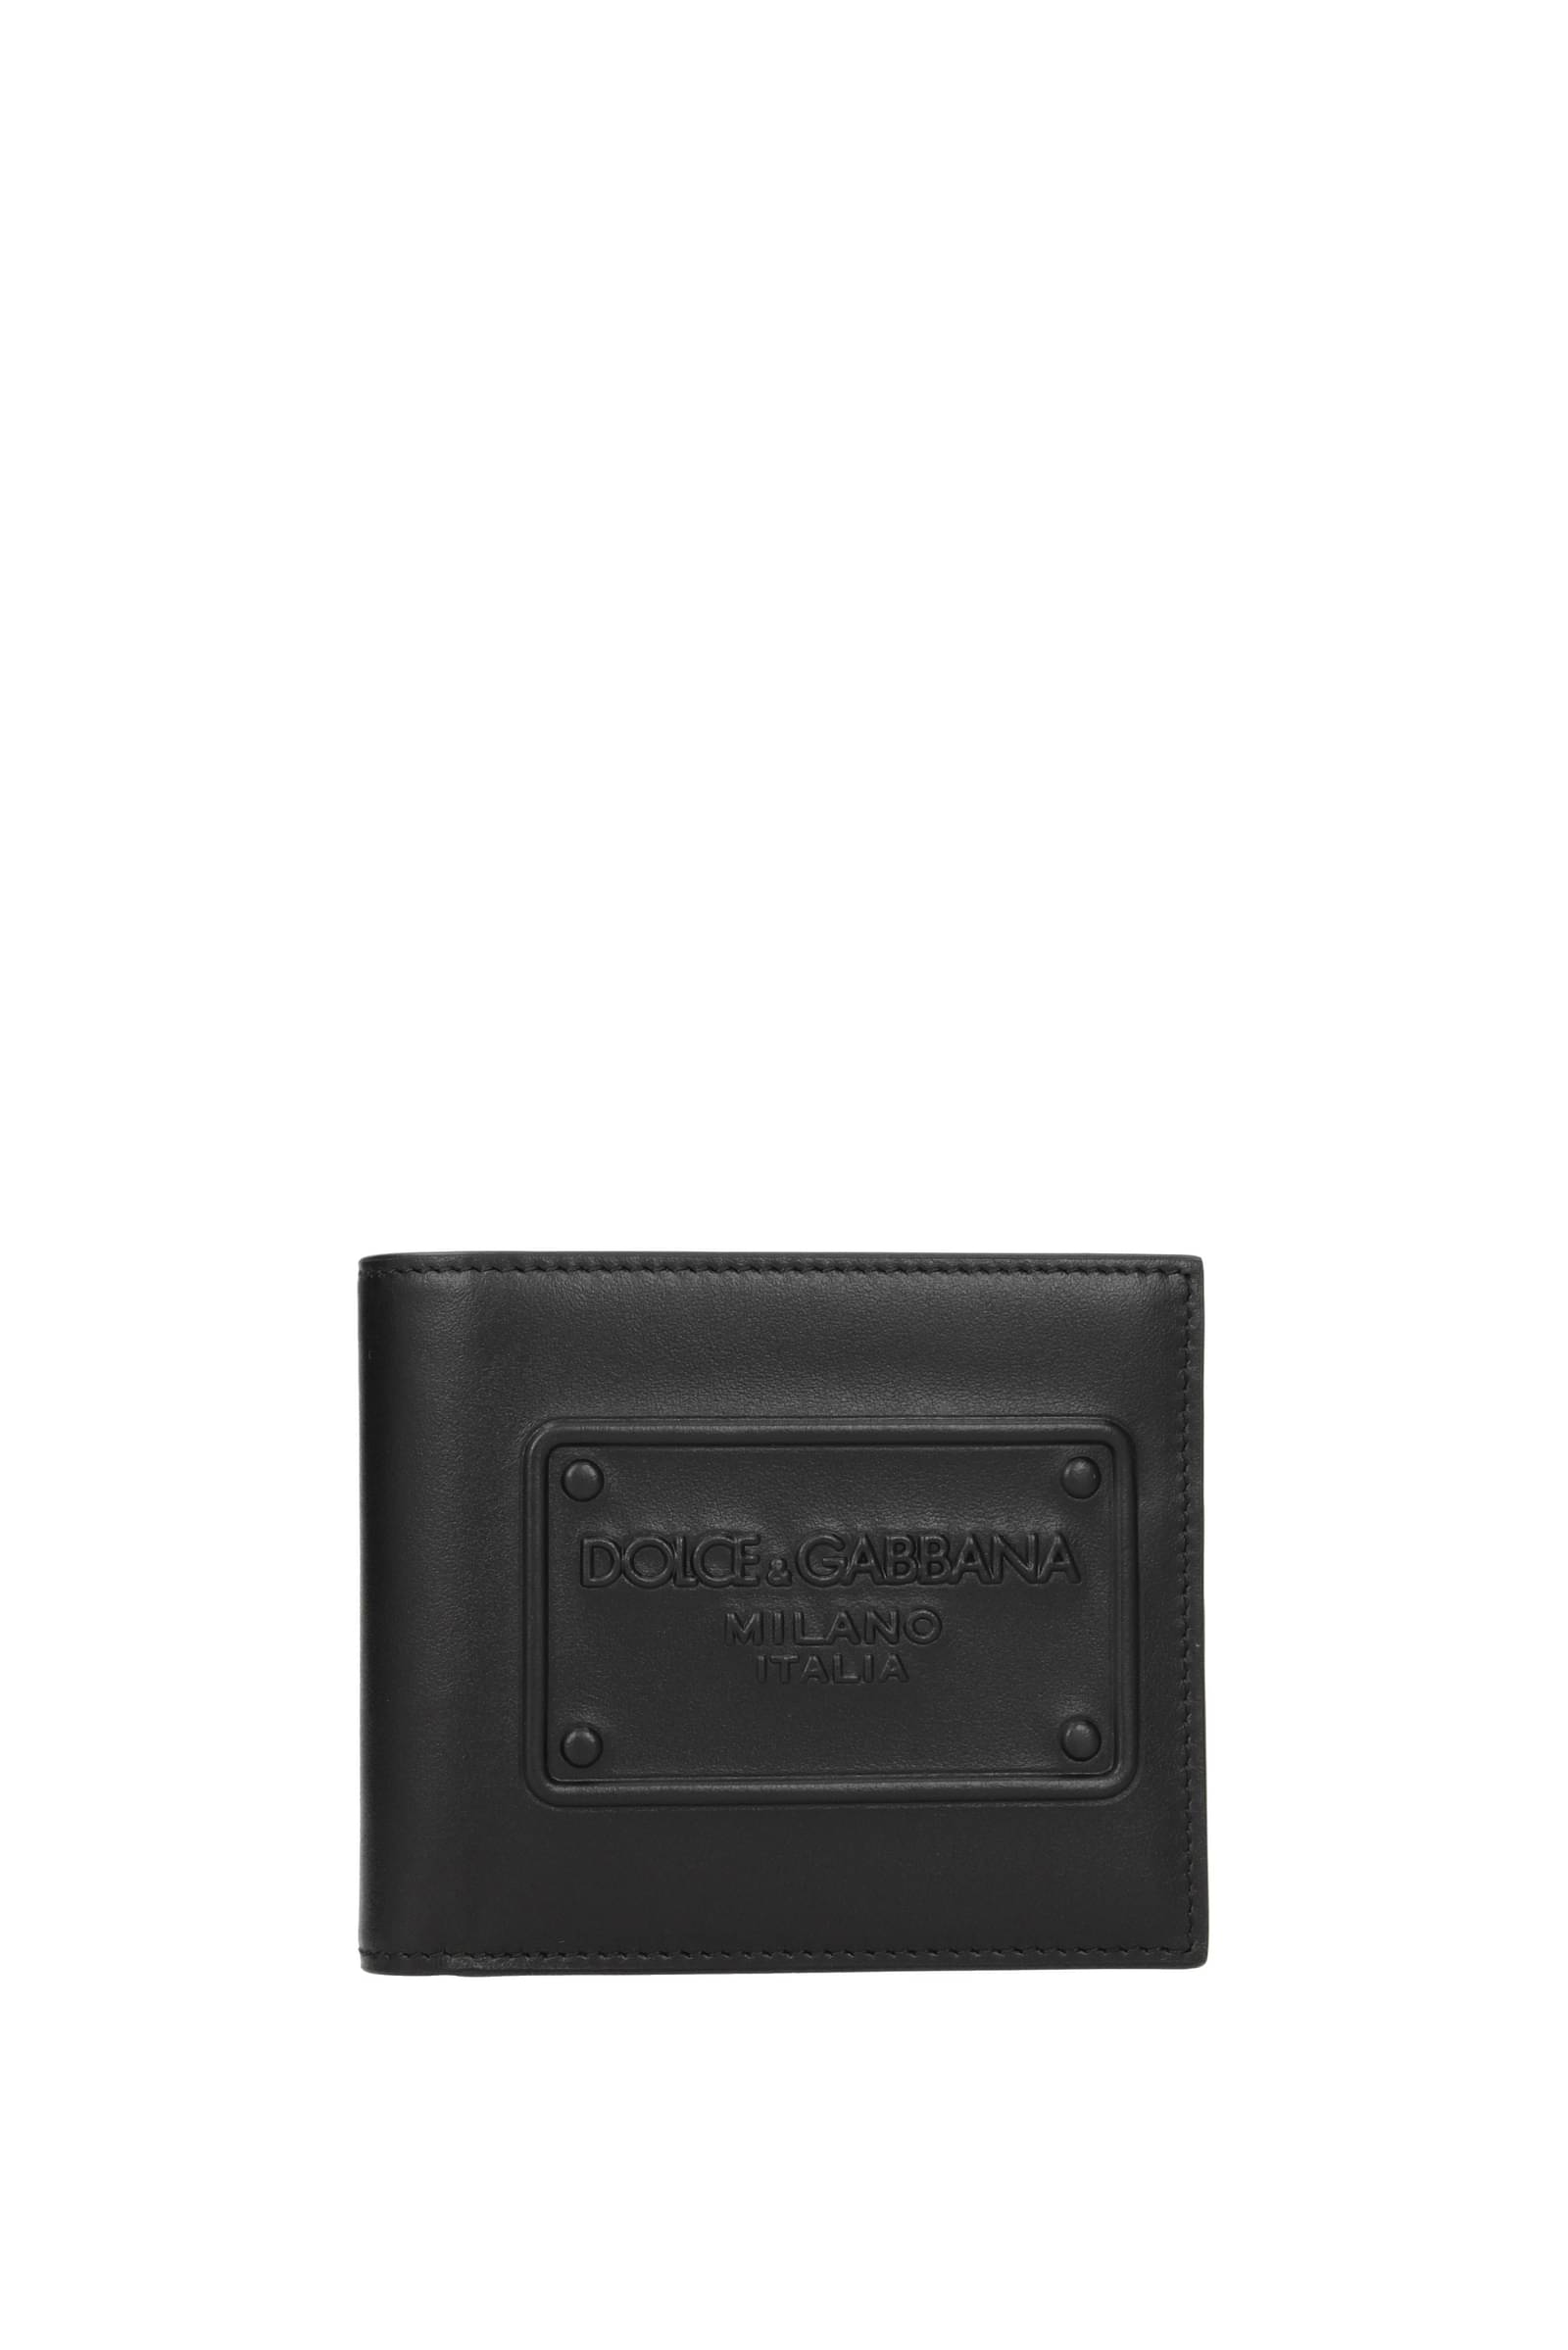 Dolce&Gabbana Wallets Men BP1321AG21880999 Leather Black 252€